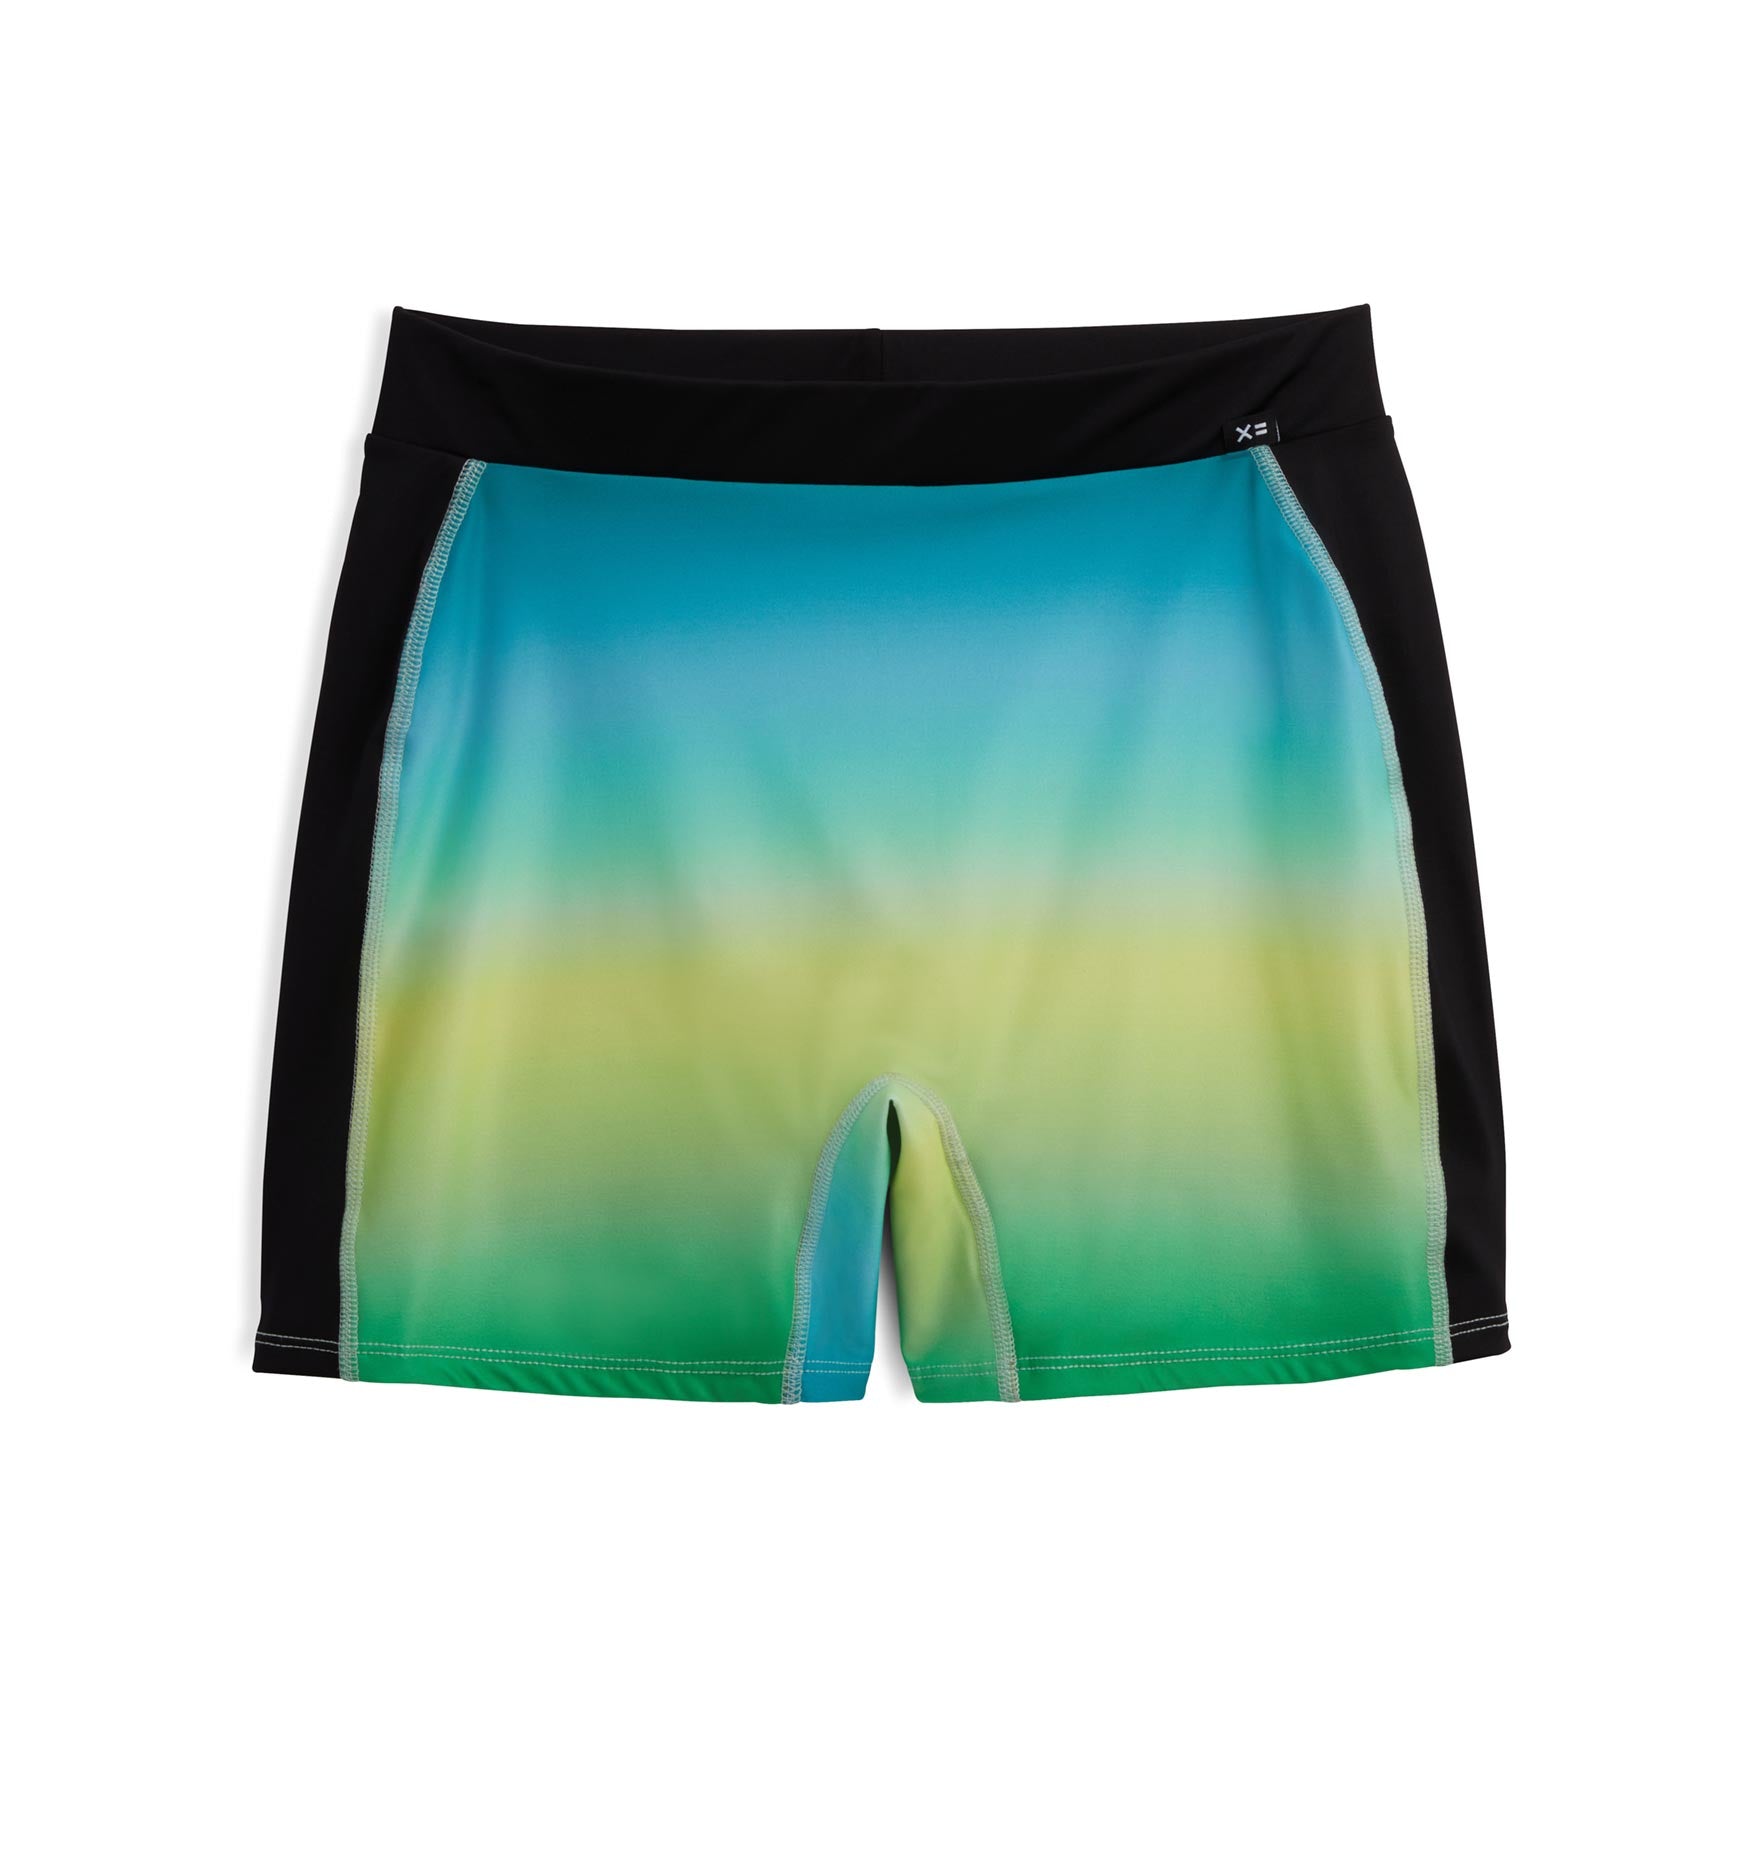 TomboyX Swim 4.5 Shorts, Quick Dry Bathing Suit Bottom Mid-Rise Trunks,  Bike Short Style, Plus Size Inclusive (XS-4X) Rainbow Pride Strip Large